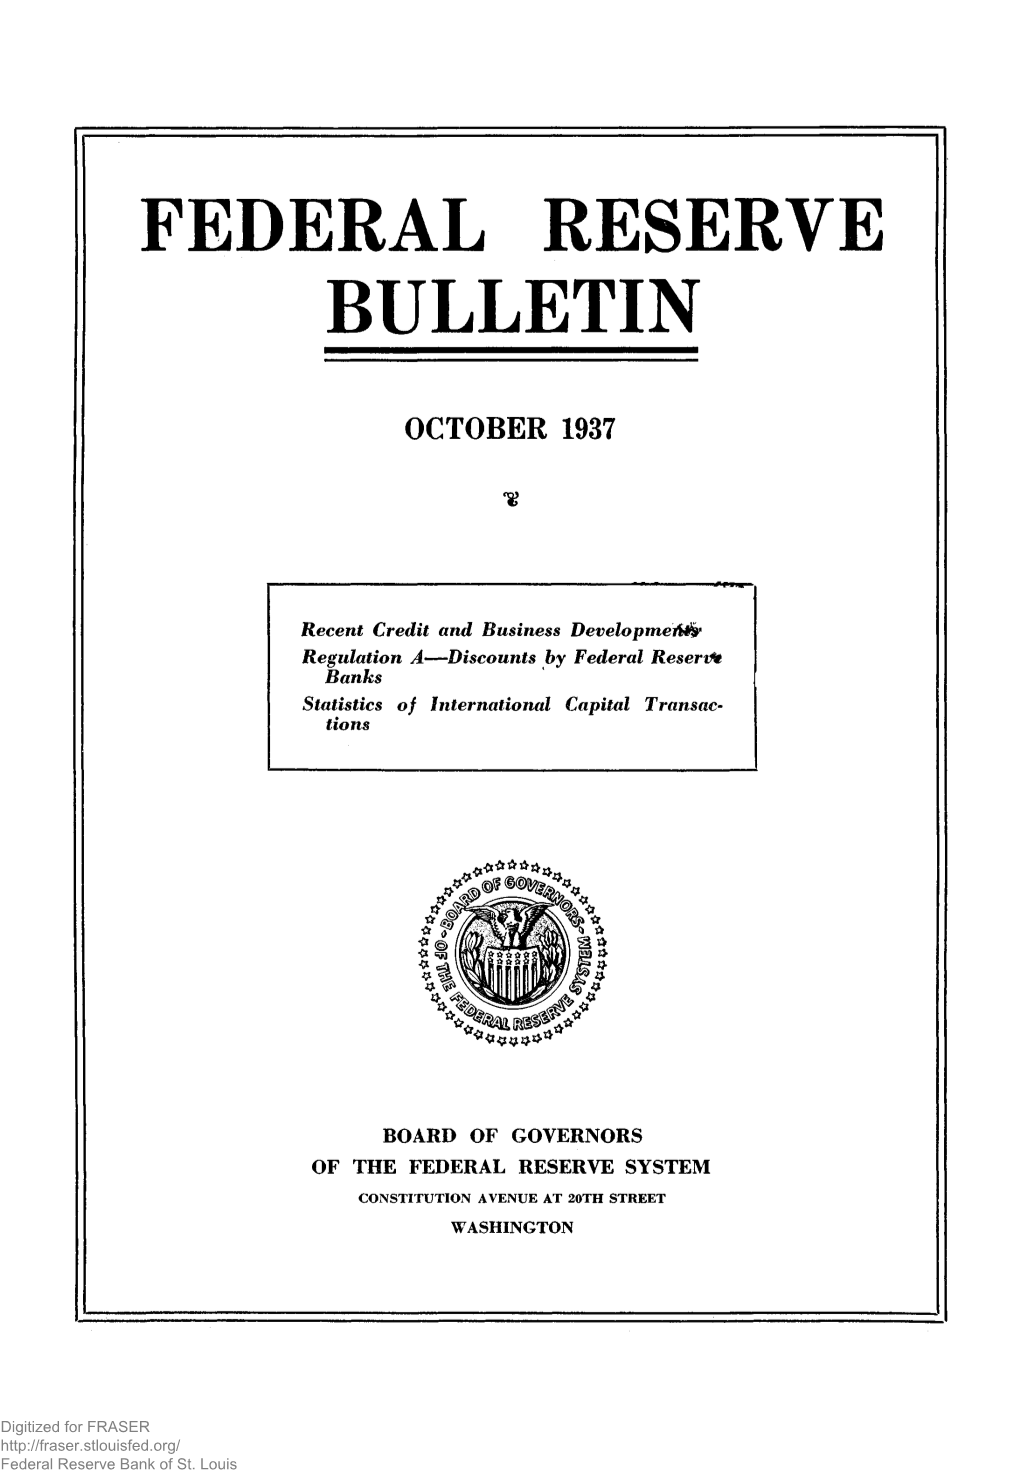 Federal Reserve Bulletin October 1937